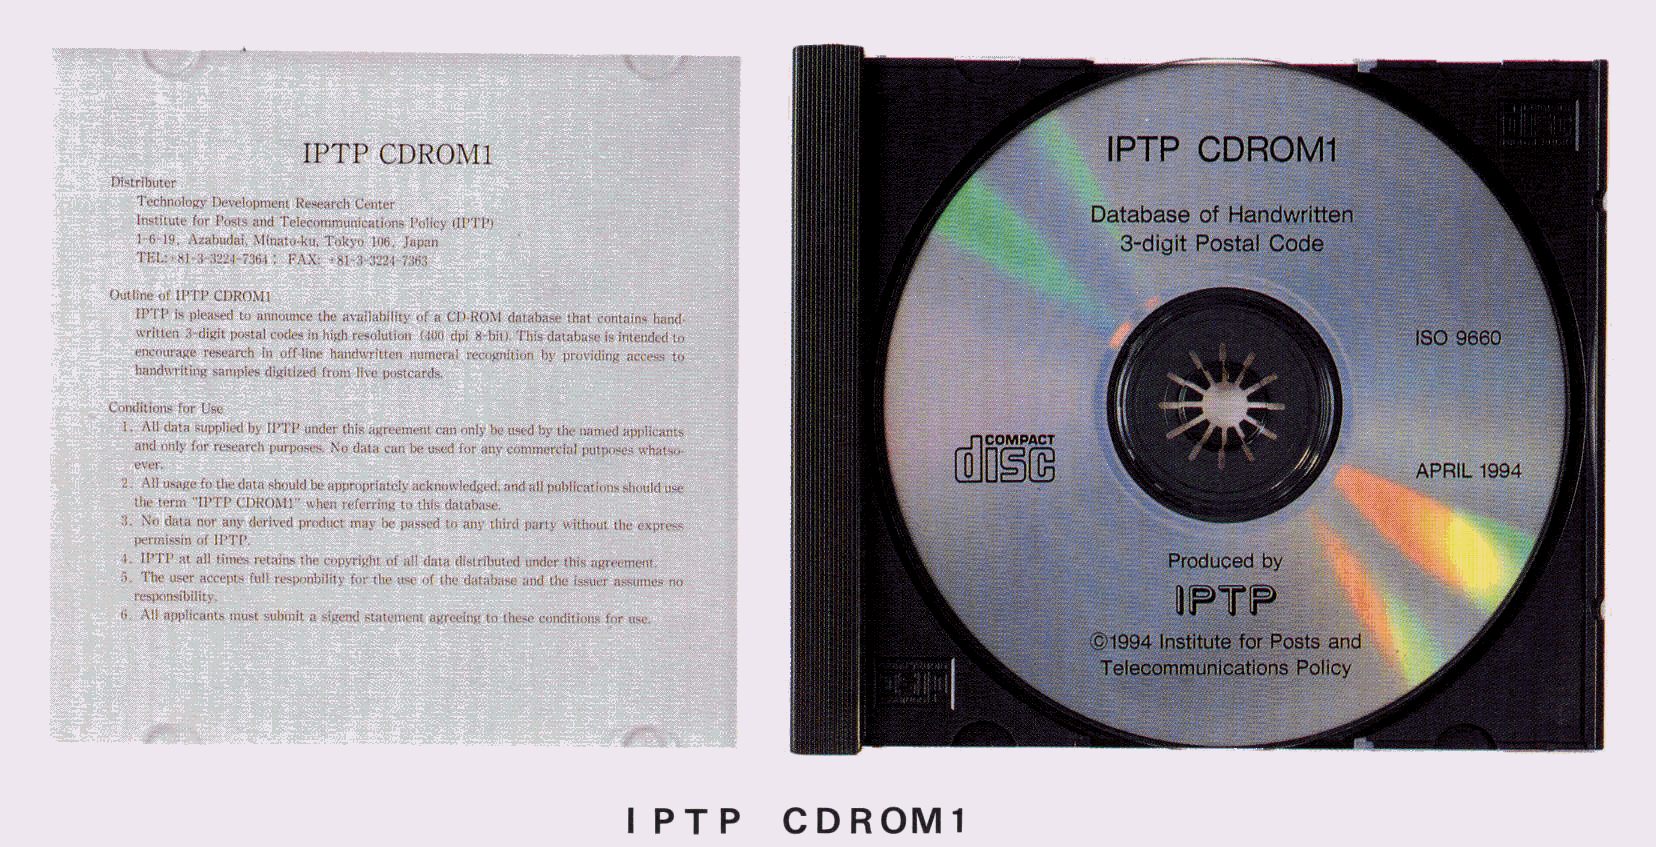 IPTP CDROM1